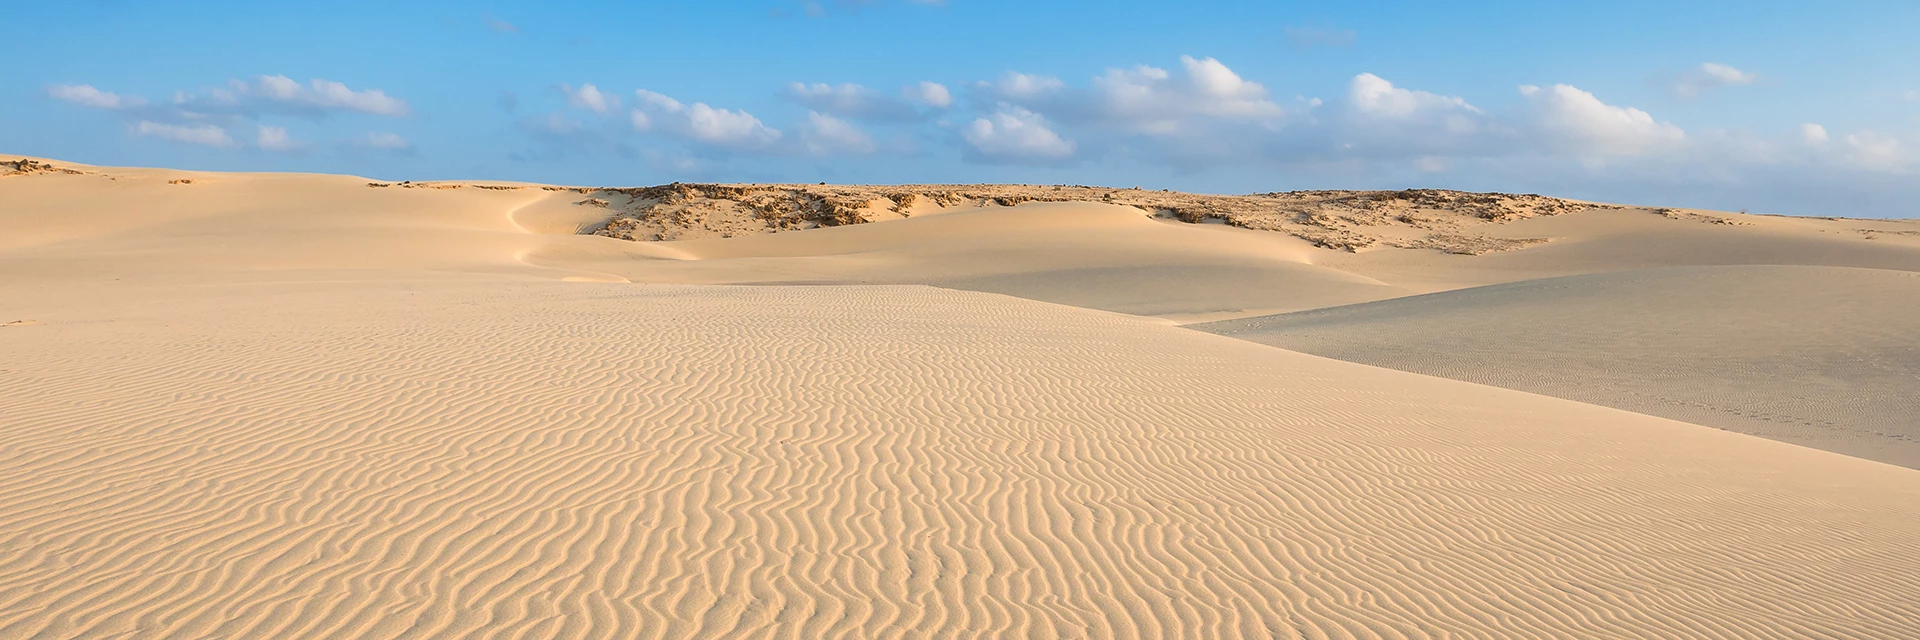 Dunes Cape Verde Islandsoavista 1